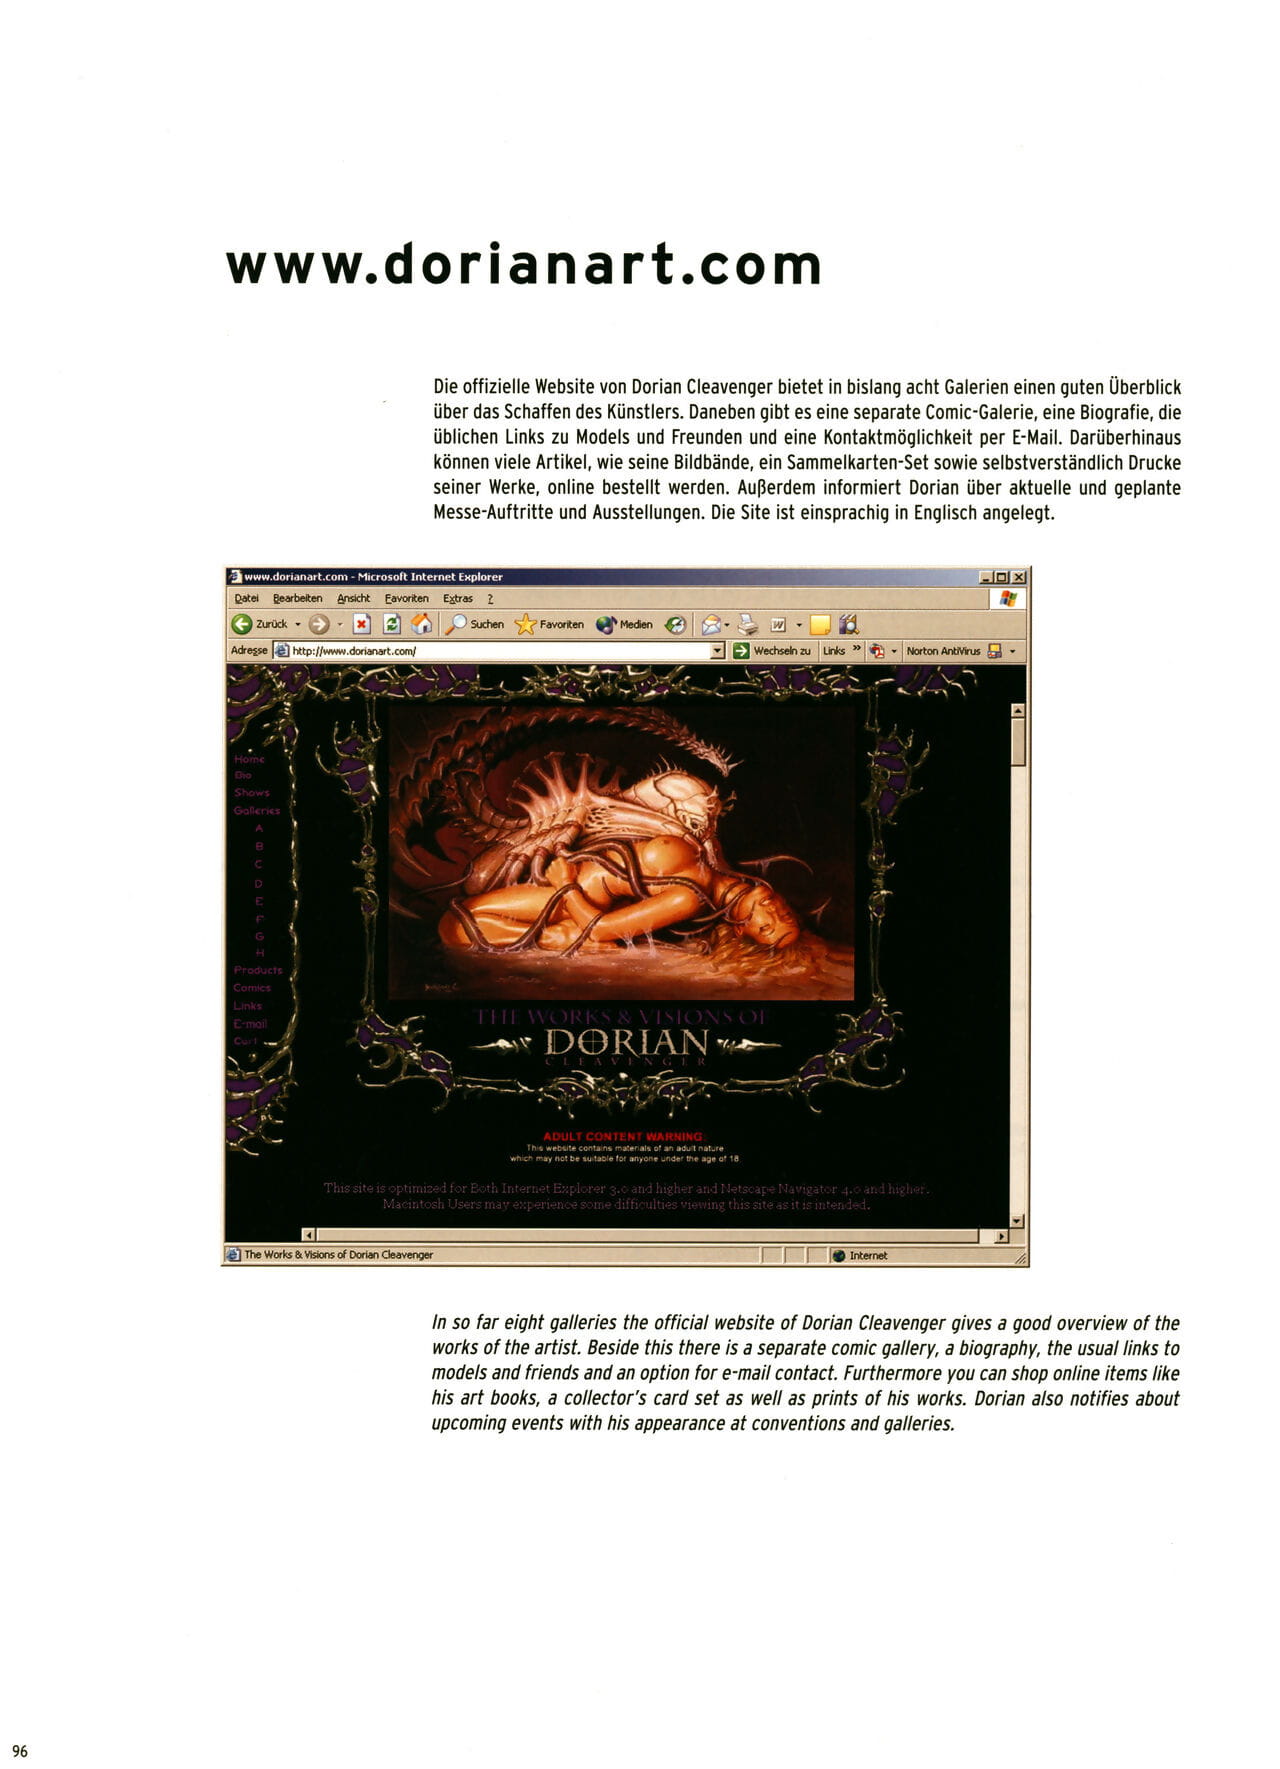 Art Fantastix #15 - The Latest Works & Visions of Dorian Cleavenger - part 5 page 1